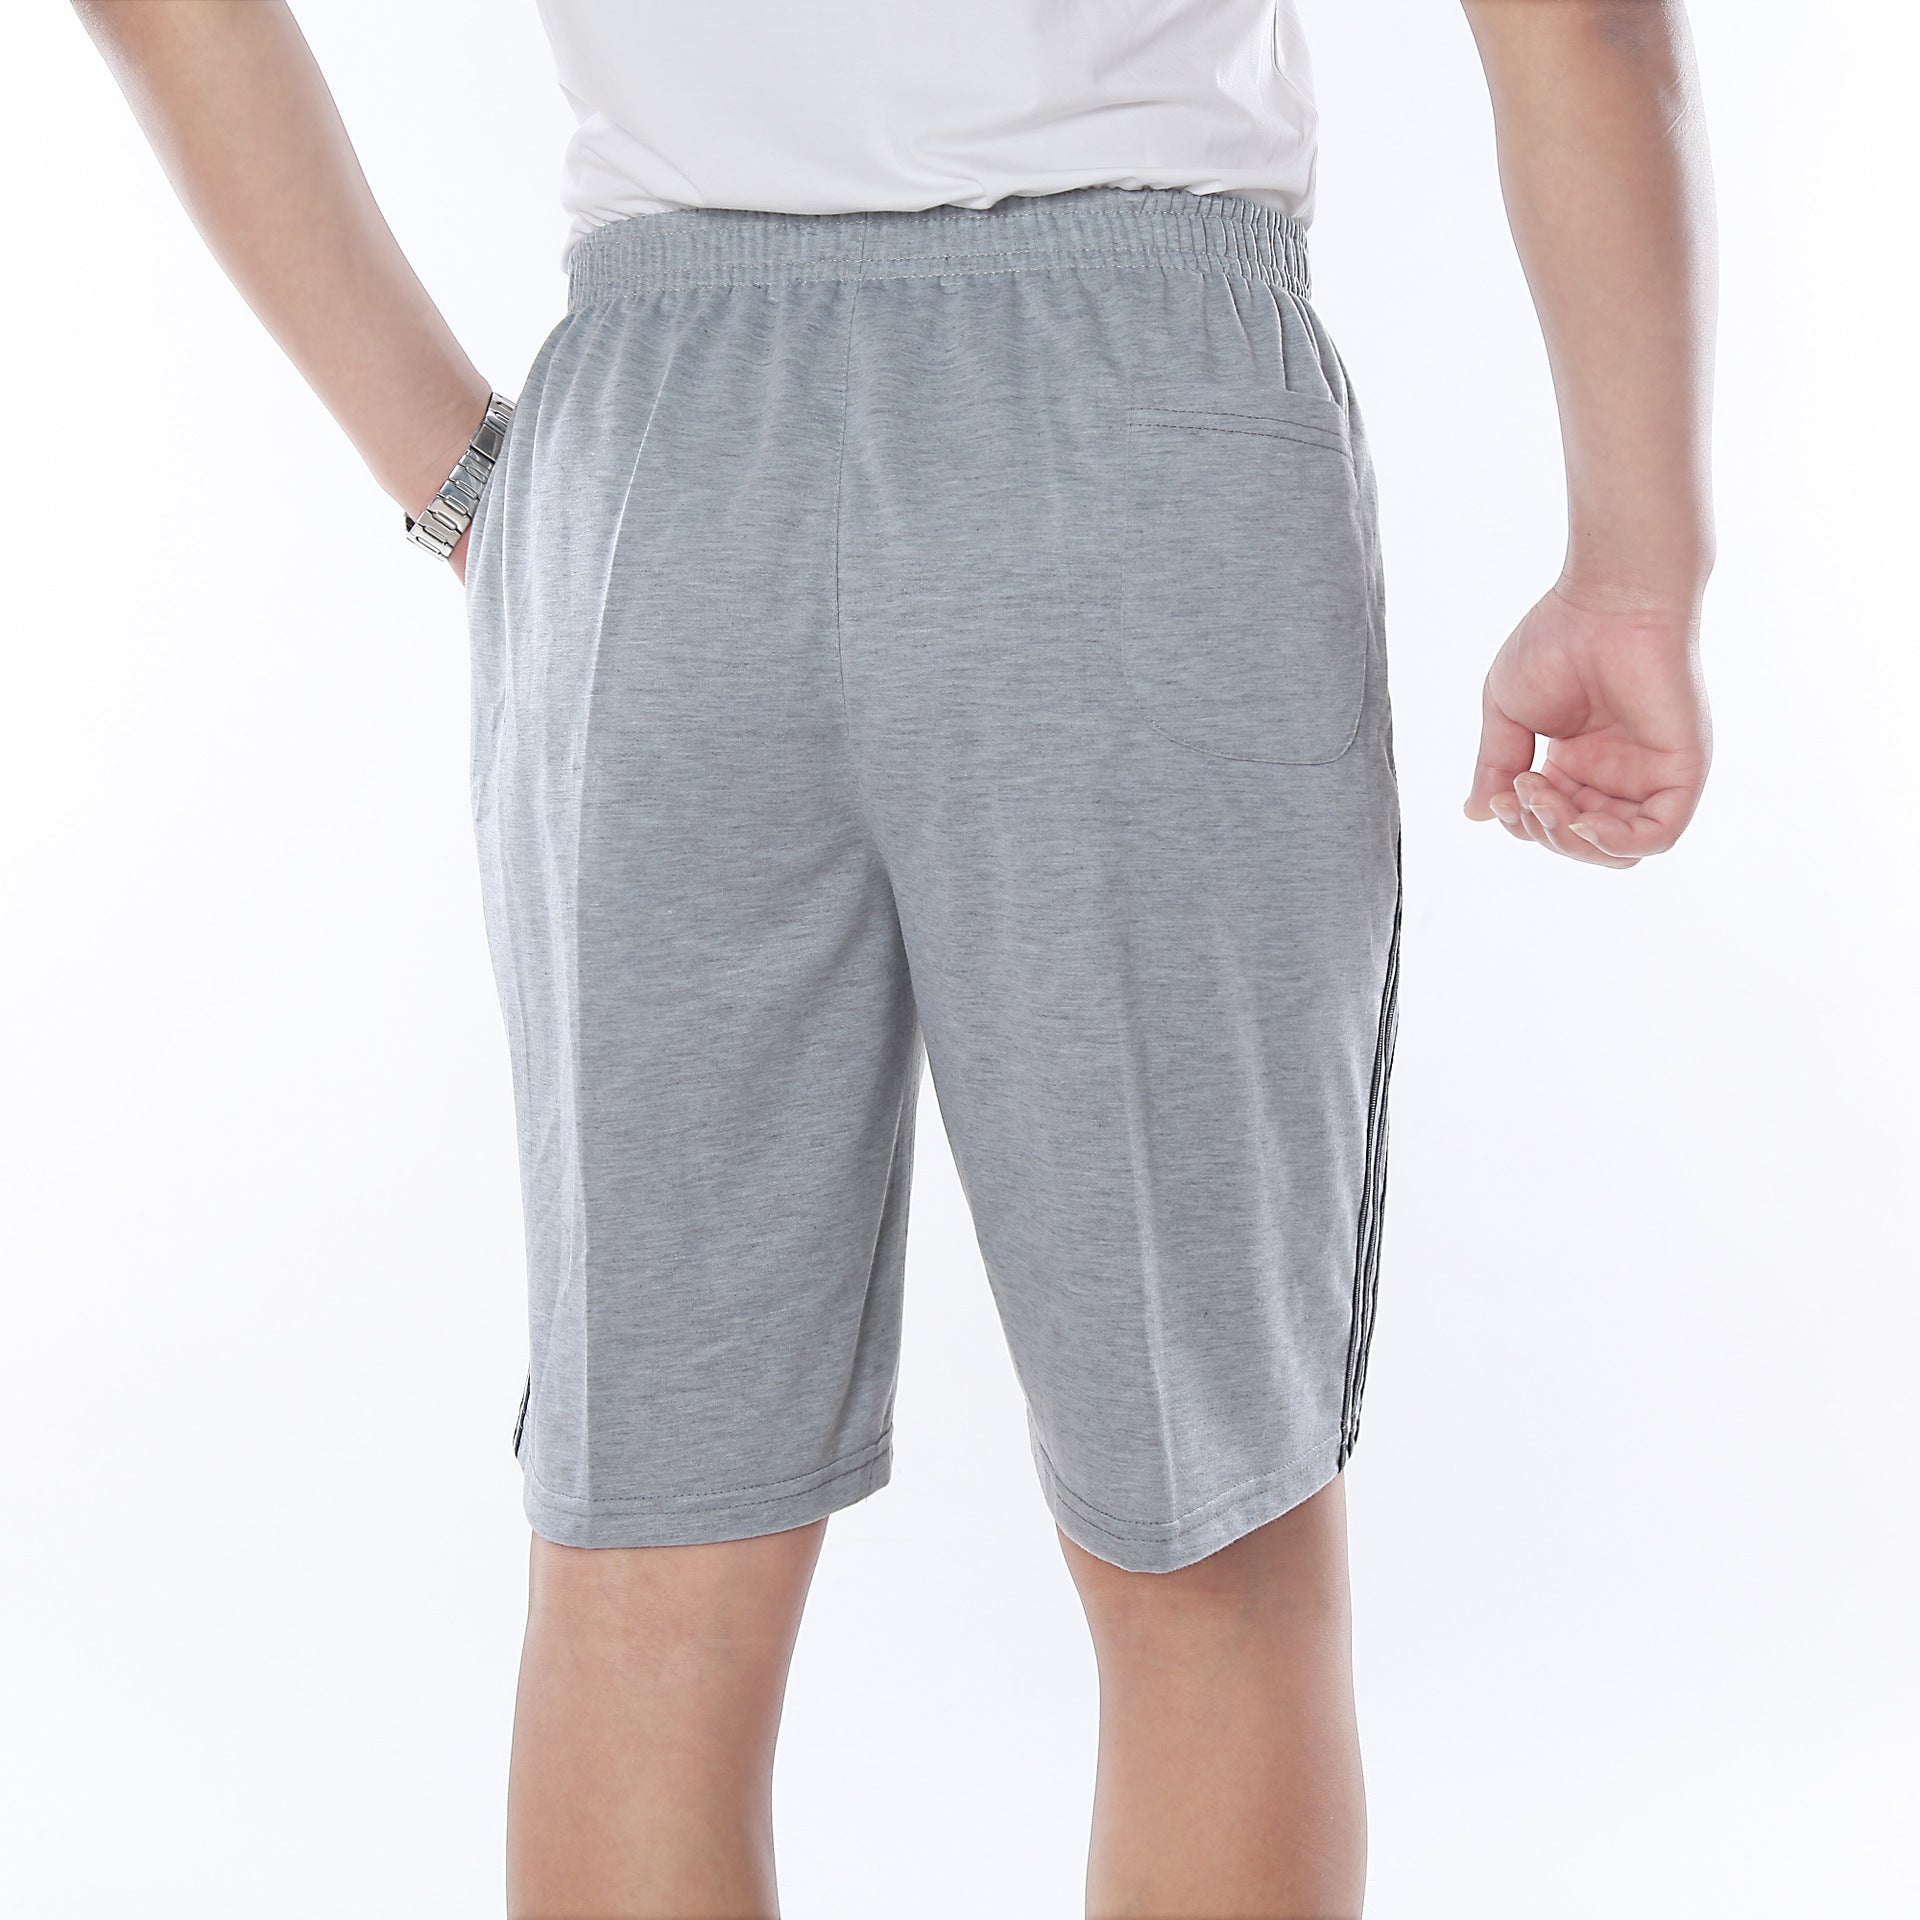 men's shorts elastic waist casual Cotton Pocket Short for men grey In Pakistan